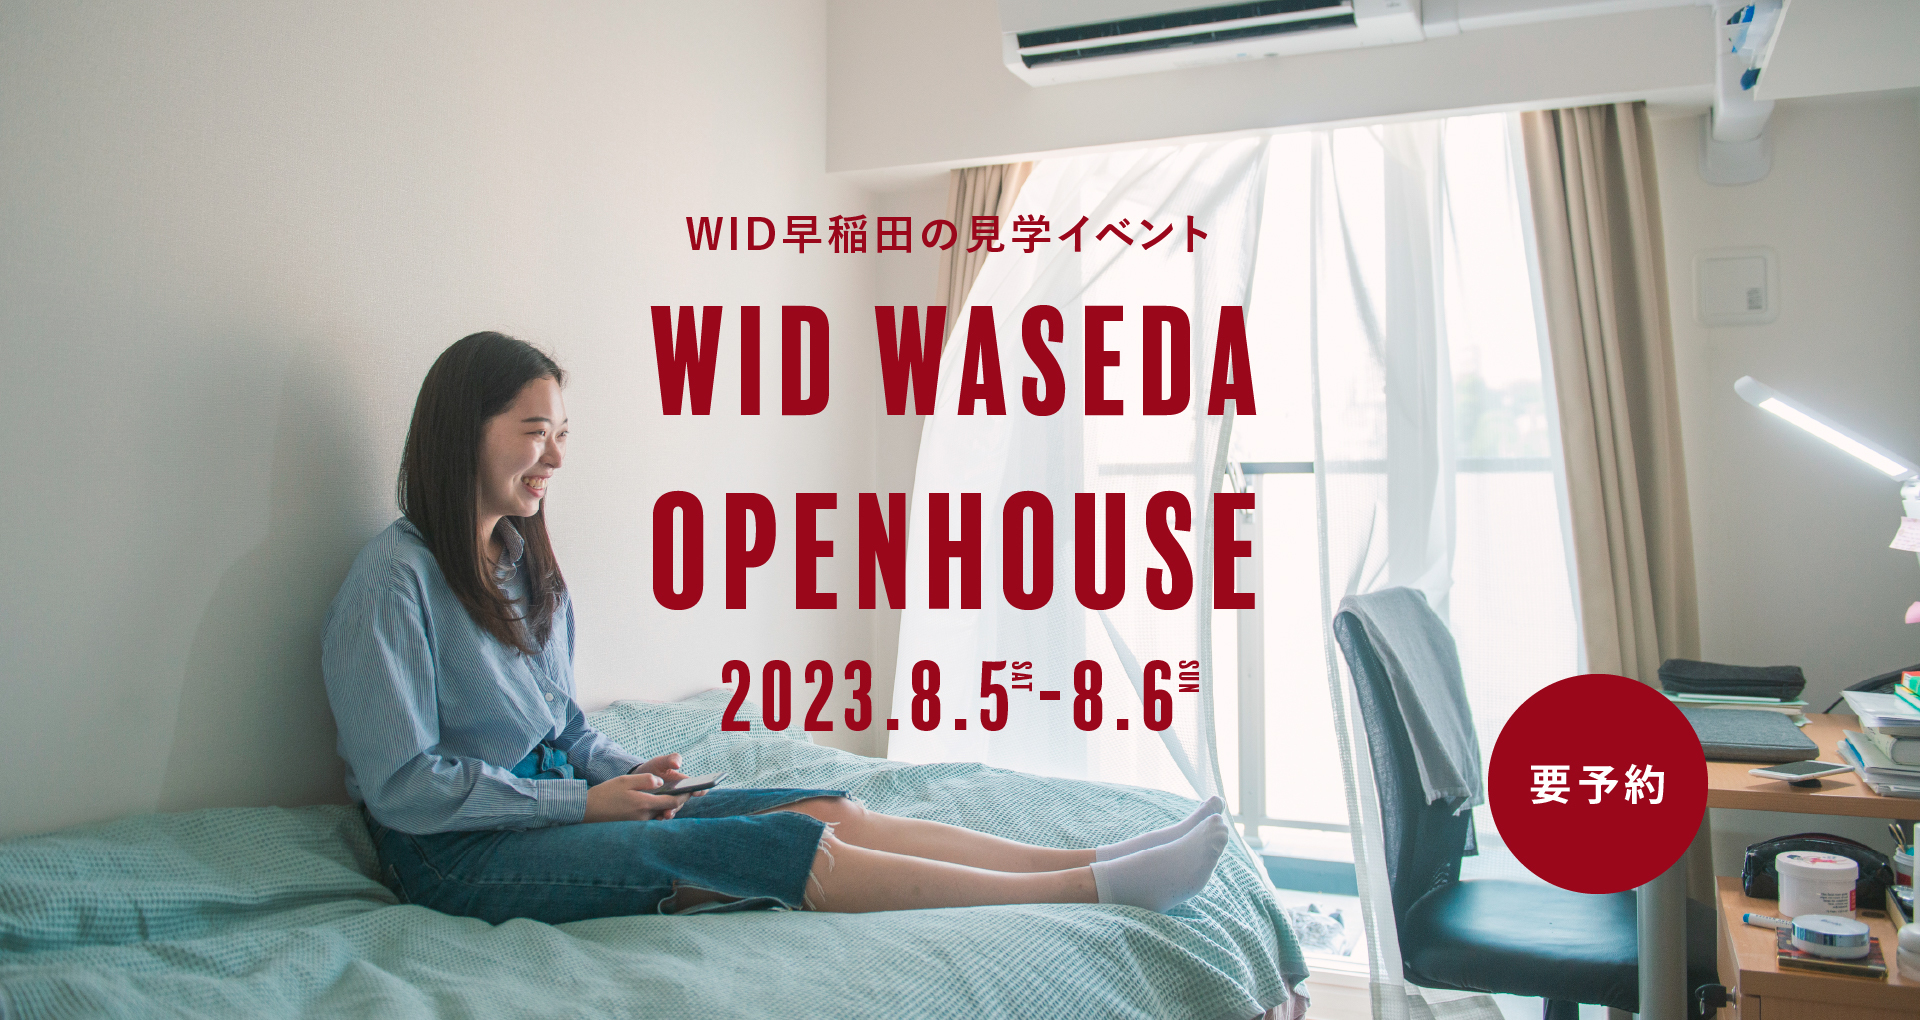 WID SPECIAL OPEN HOUSE 2023をWID早稲田で開催します。現地でお待ちしております！